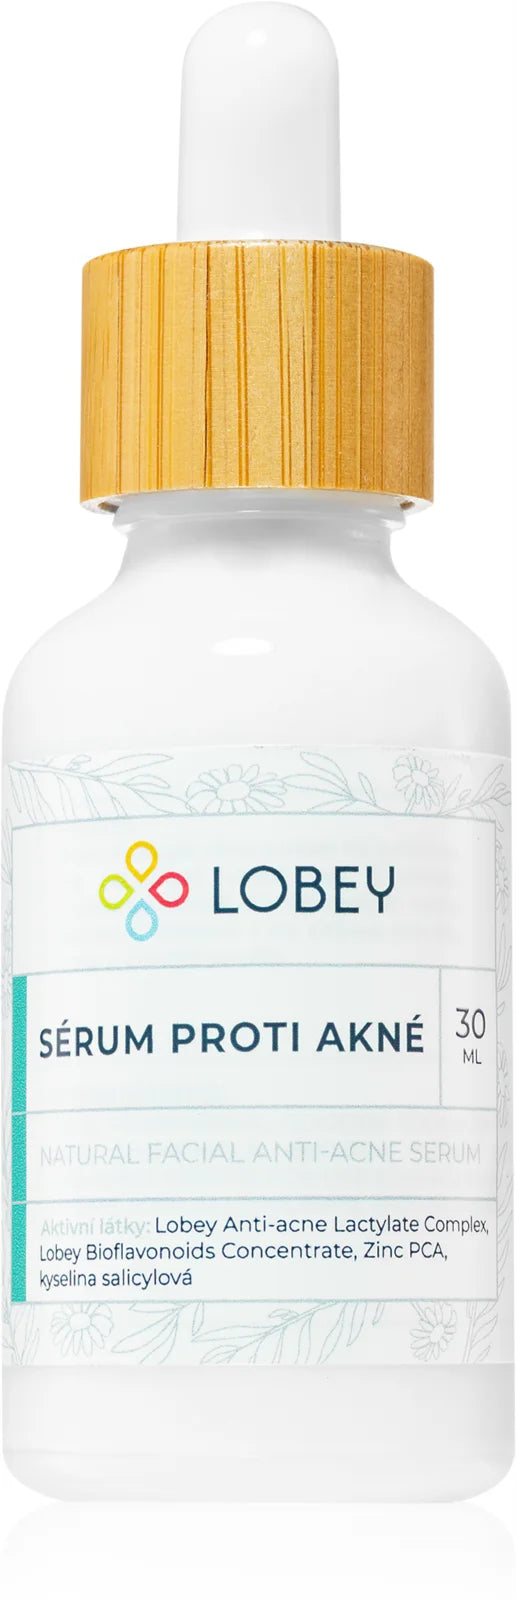 Lobey Anti-acne serum 30 ml